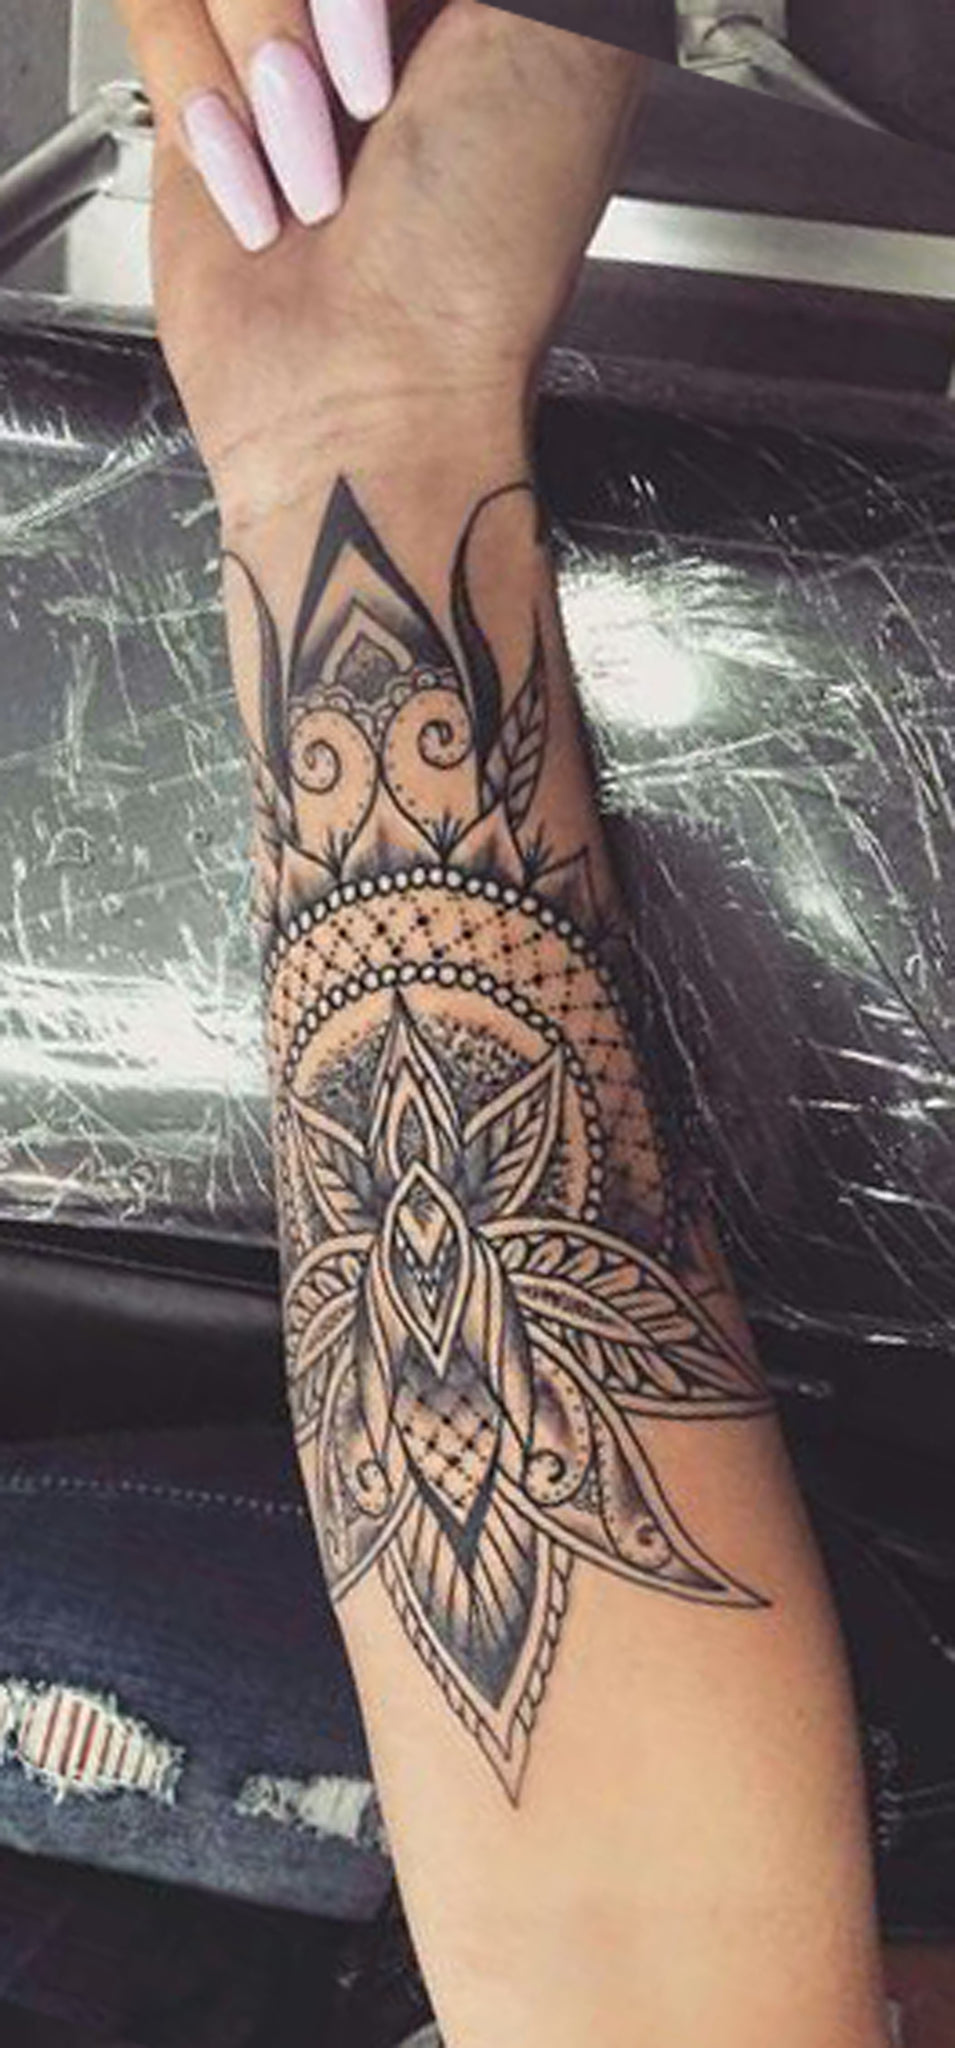 Sacred Geometric Mandala Forearm Tattoo Ideas for Women - Lotus Arm Tat -  ideas sagradas del tatuaje del antebrazo del loto geométrico para las mujeres Chicas - www.MyBodiArt.com